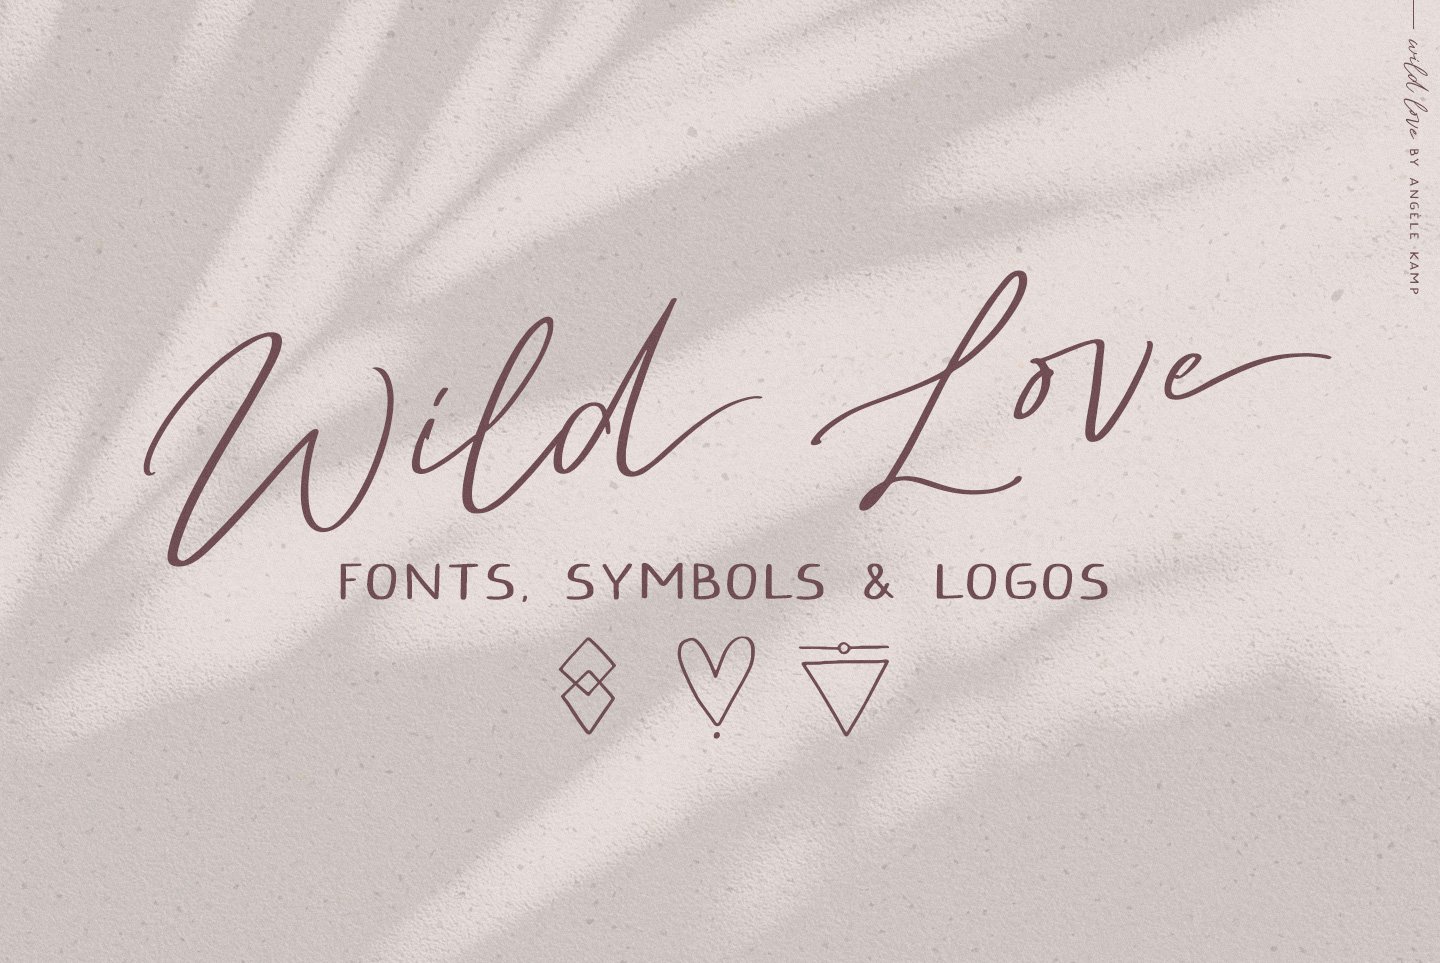 Script font Wild Love logos cover image.